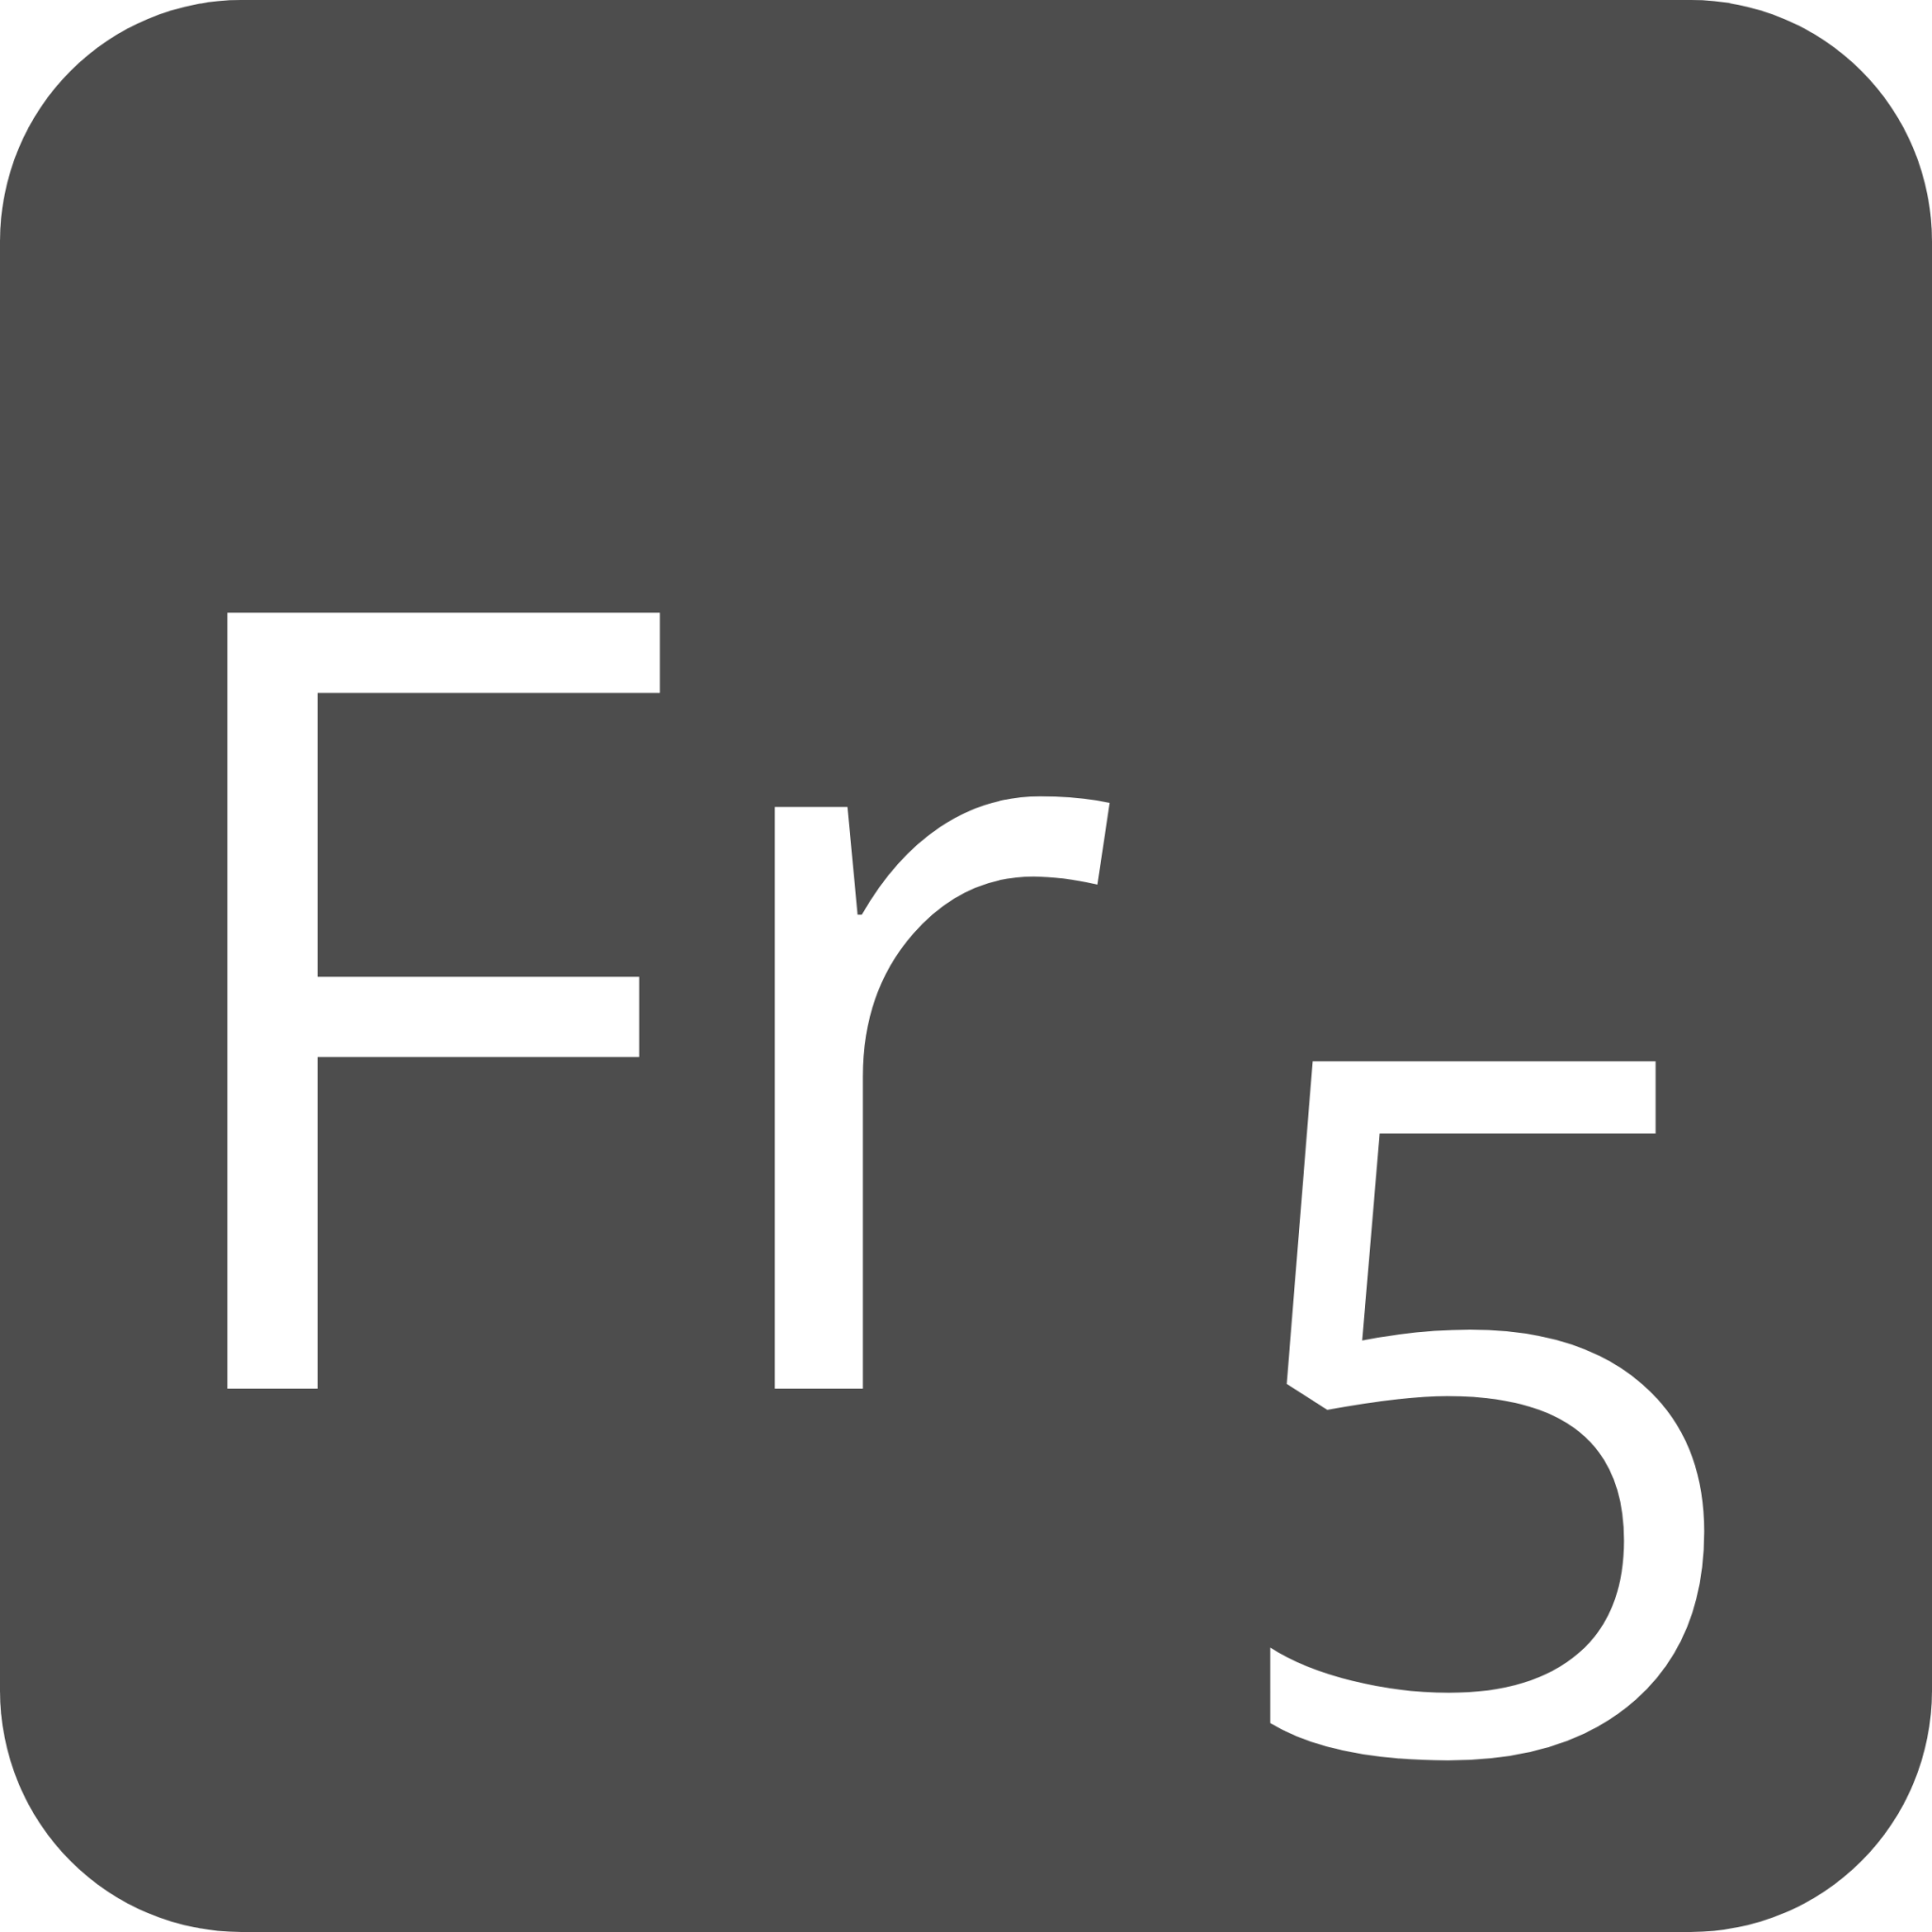 indicator keyboard Fr 5 icon